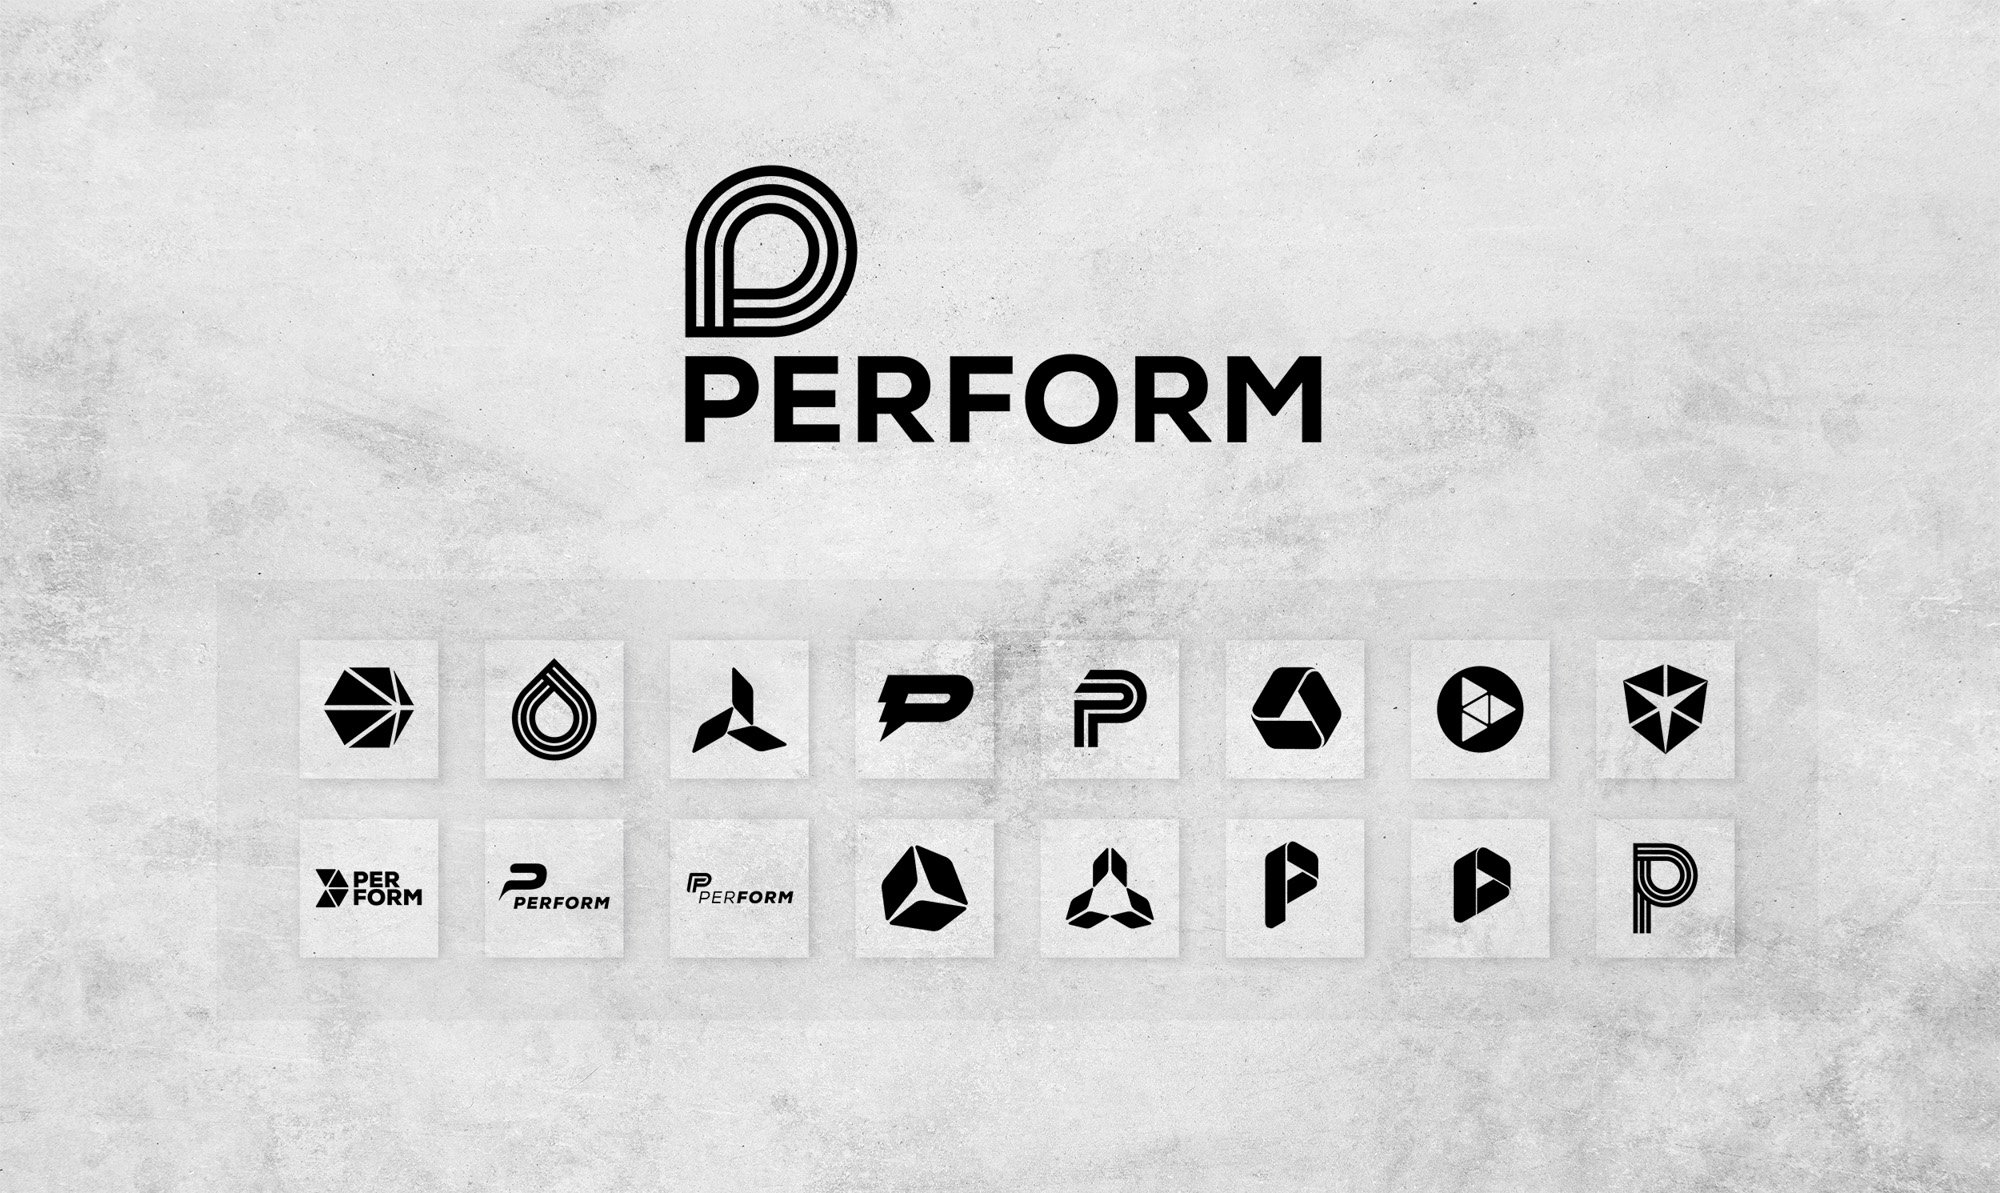 Perform logo sketches